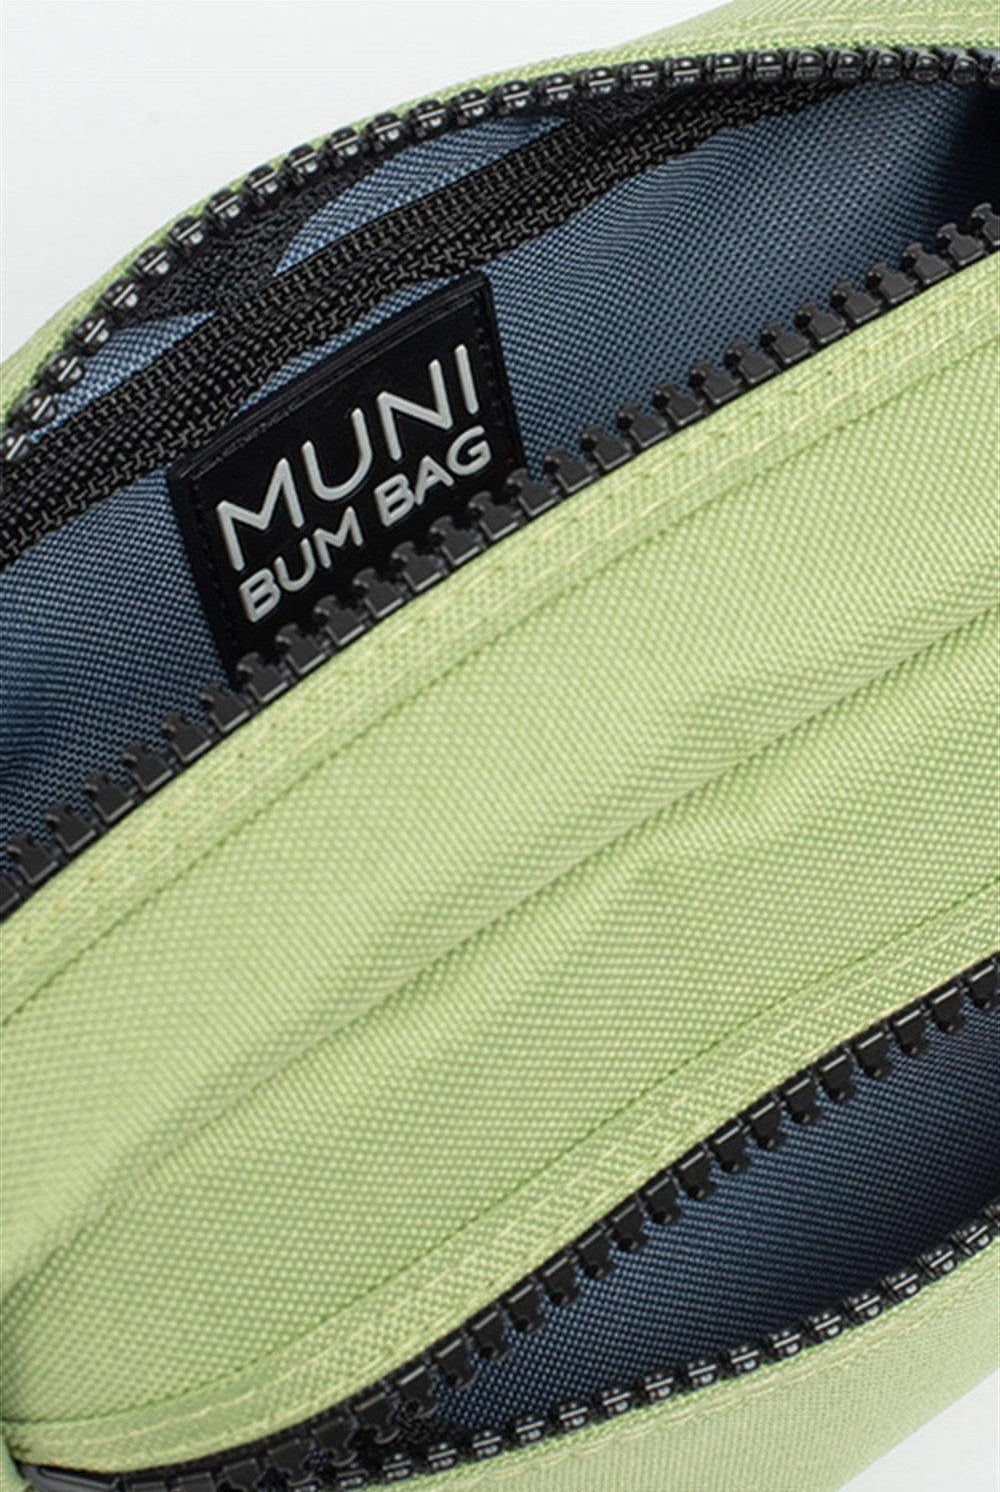 Muni Bum Bag | Mini Mu Nile Green Single Bumbag | Milagron